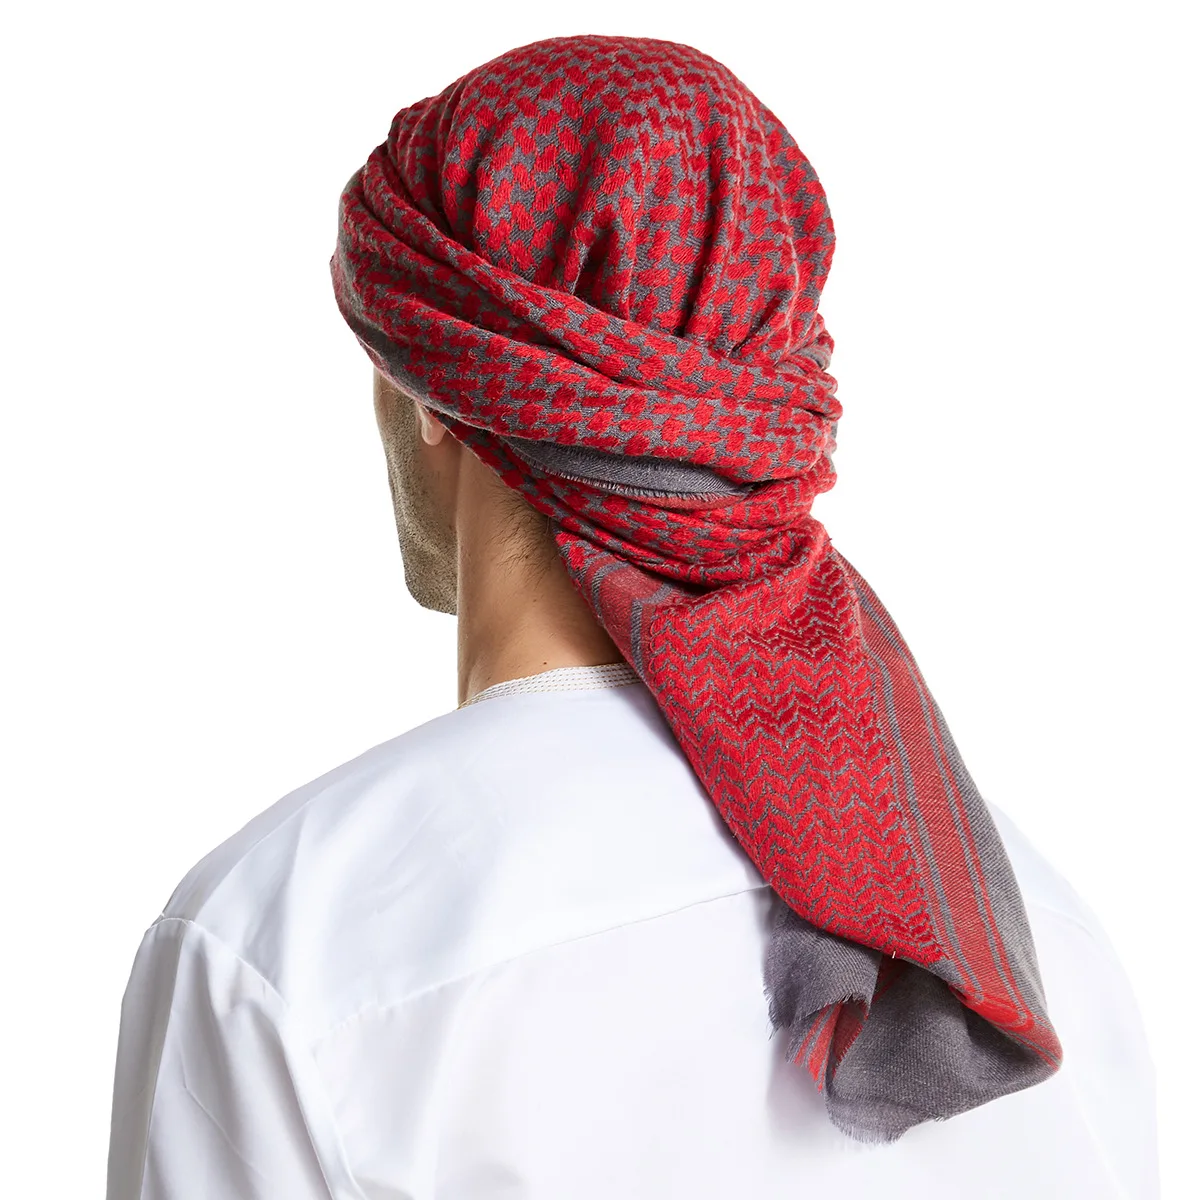 Arab Men Head Scarf Adult Shemagh Keffiyeh Muslim Saudi Tactical Desert Square Wool Scarf Islam Headdress Shawl Turban Eid Gift mens red scarf